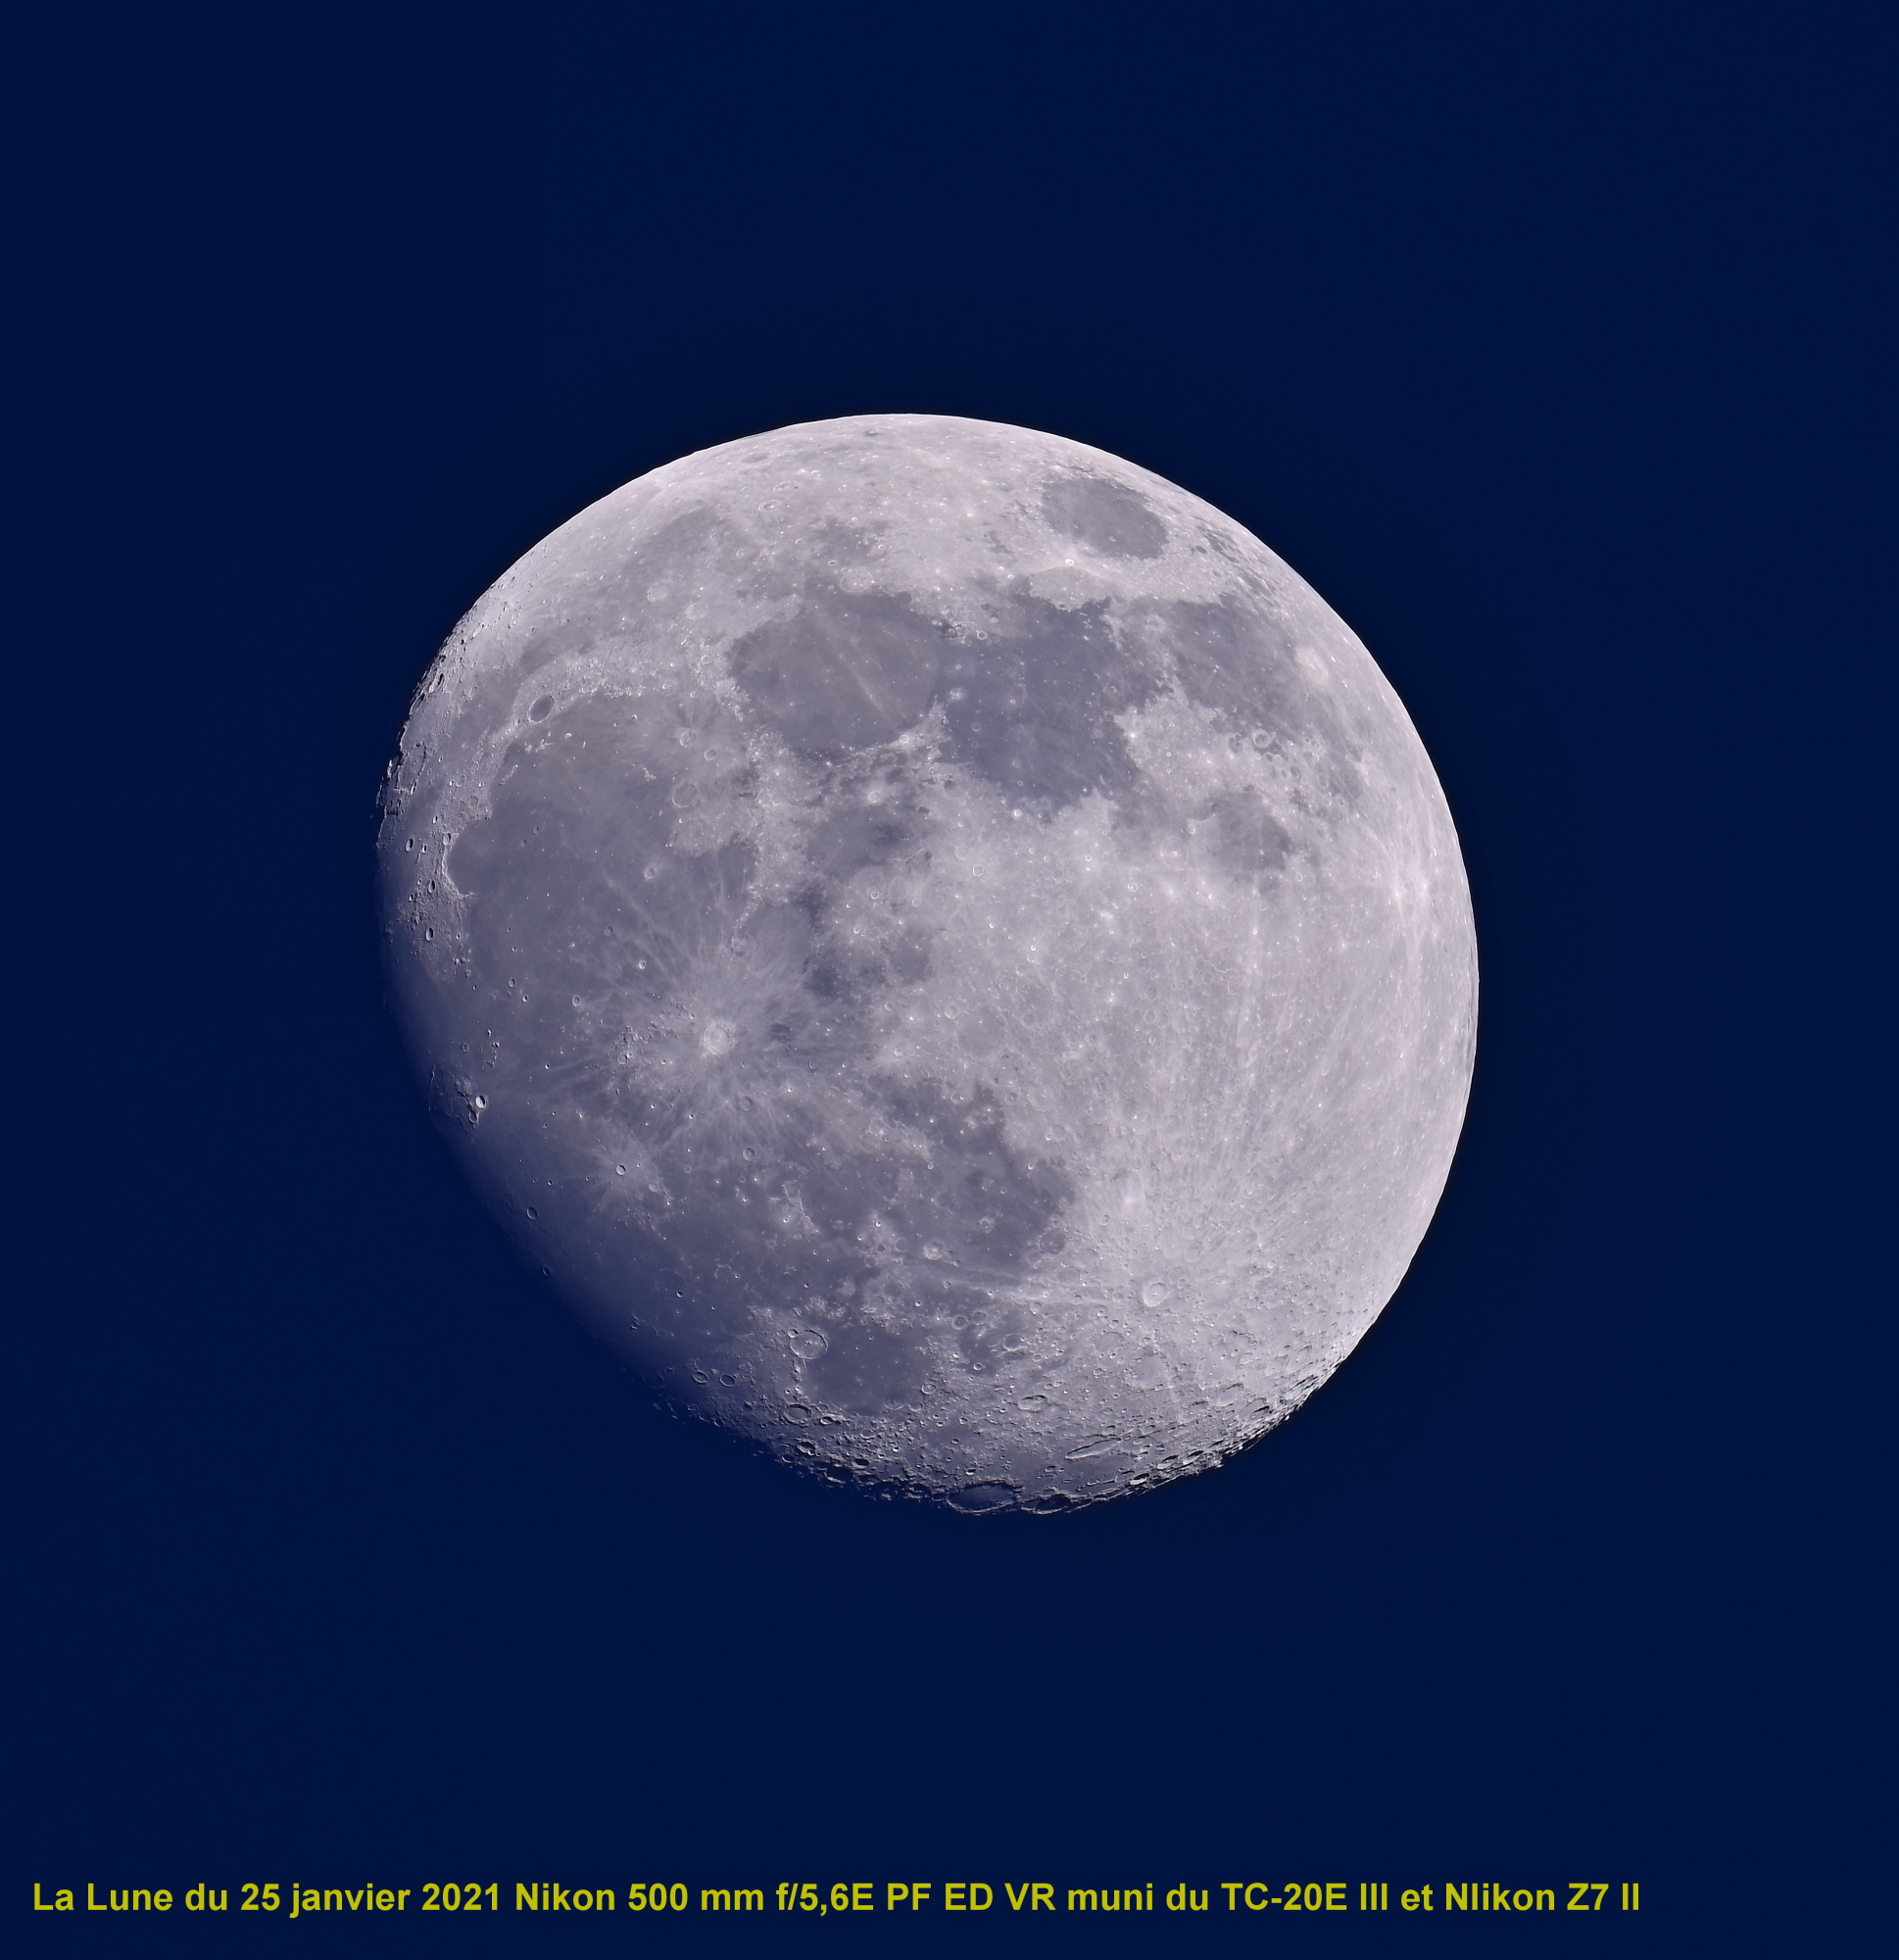 La Lune 35 images BV TIFF V2_DxO 1 JPEG.jpg